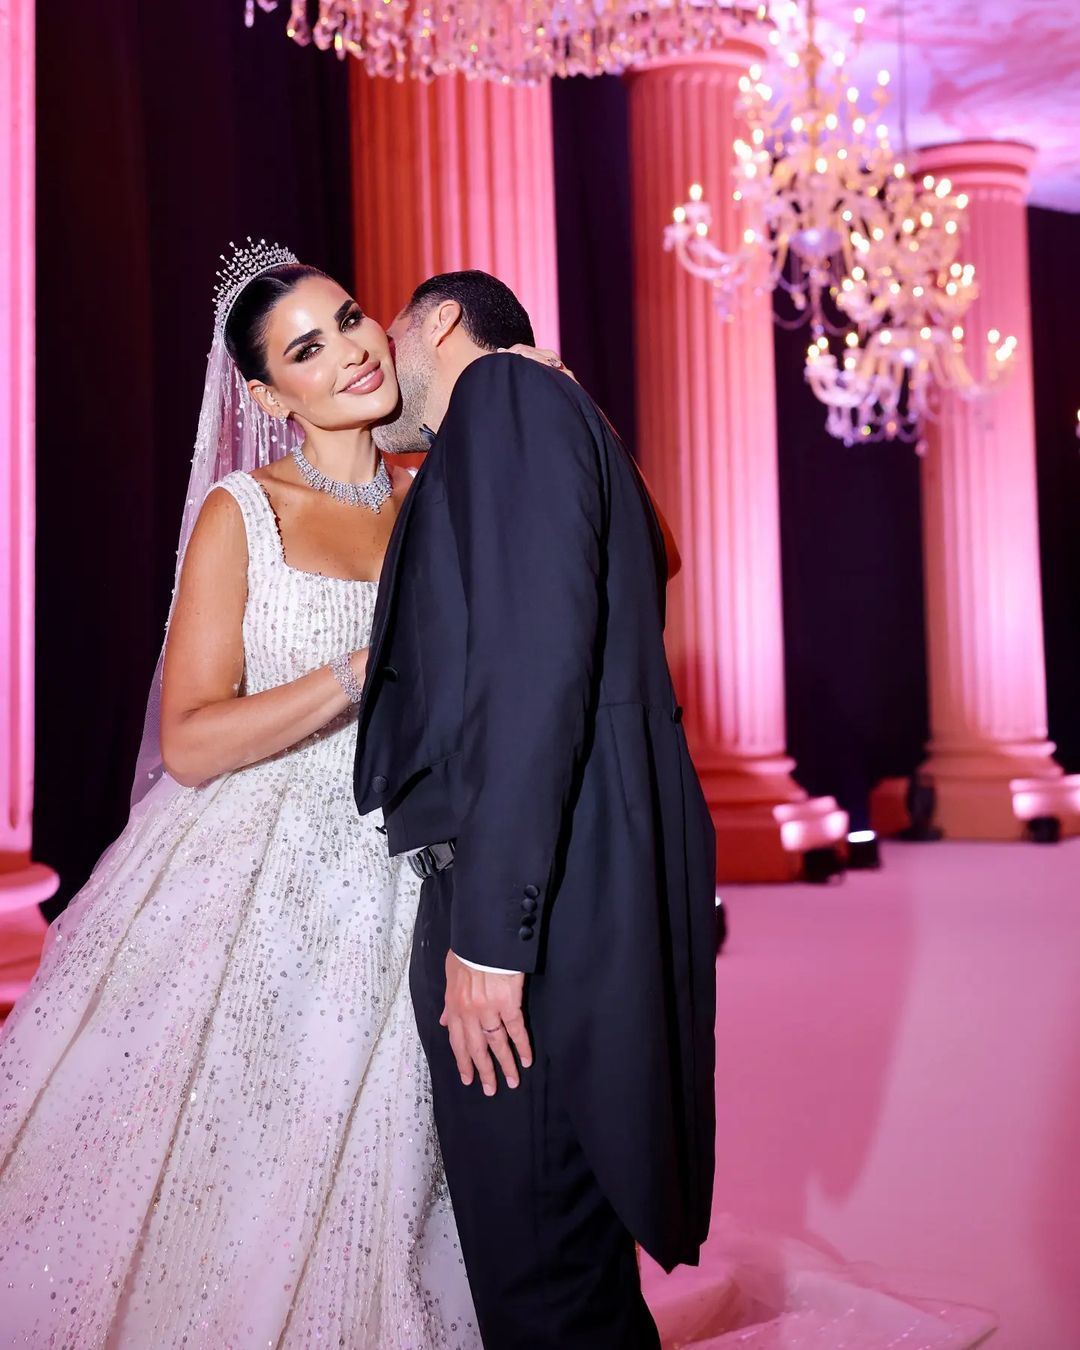 Photos ... Natalie Basma and Hassan Abdallah Wedding Details | Daleeeel.com